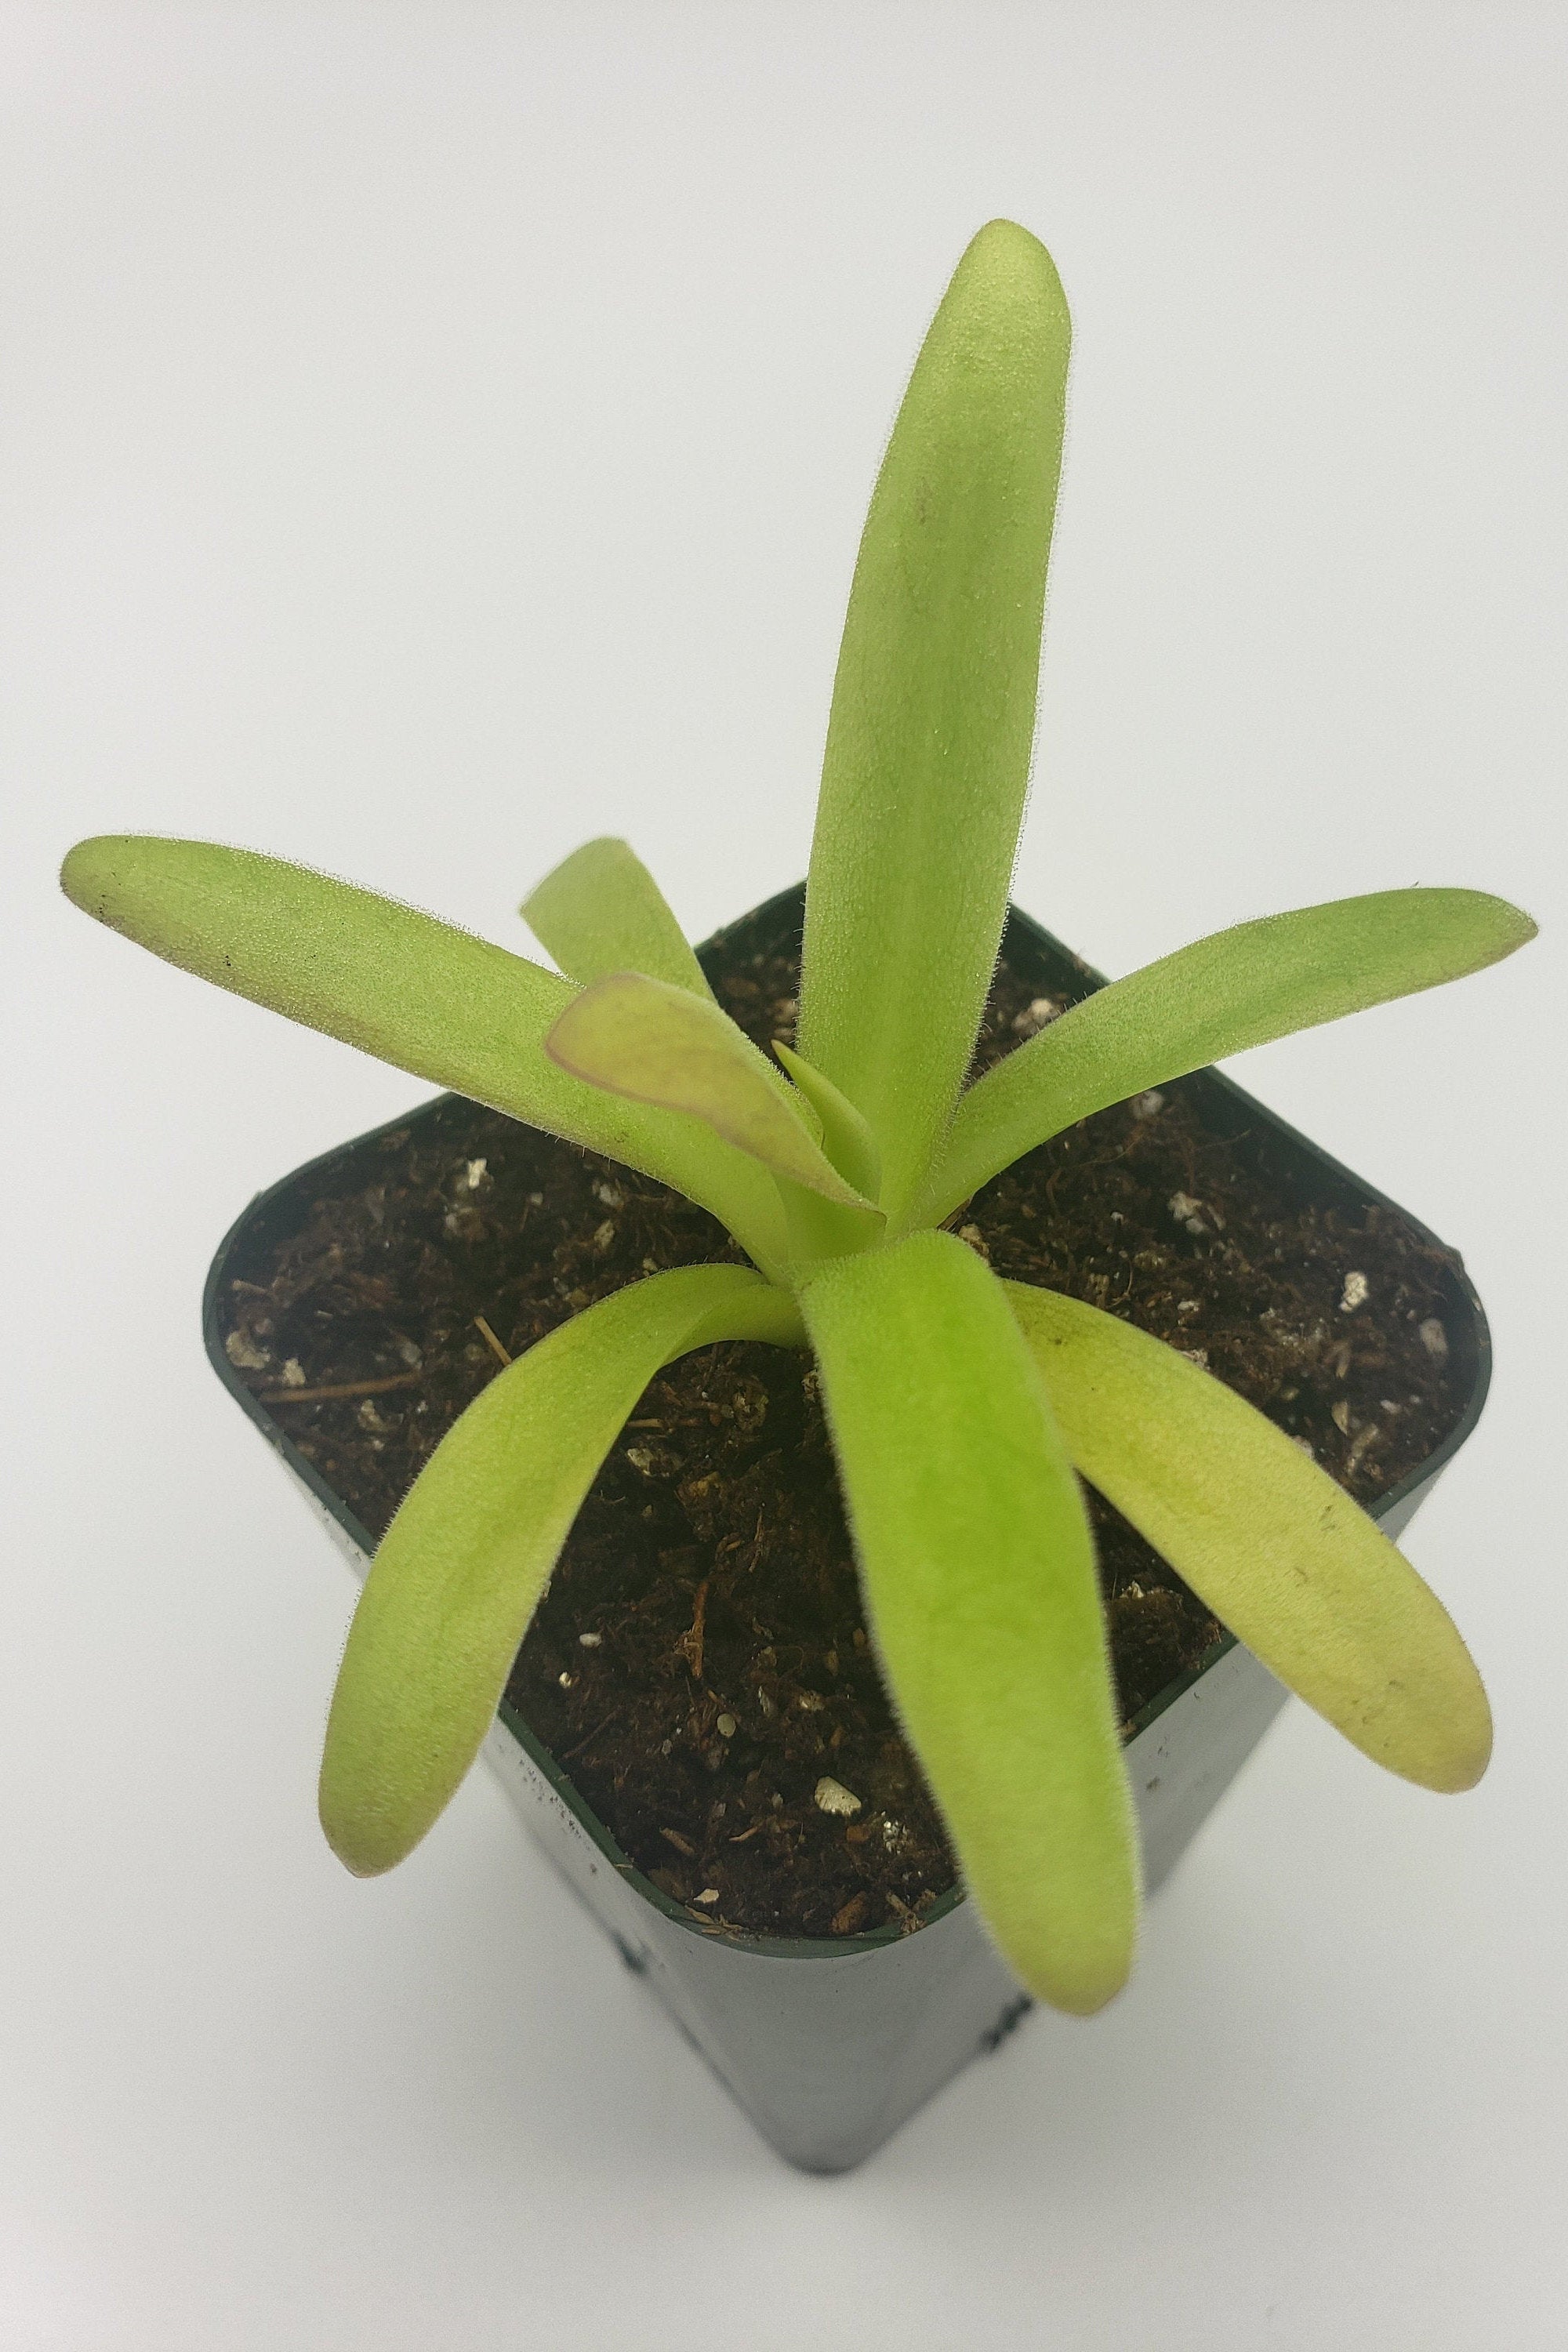 Pinguicula agnata 'El Lobo' x moctezumae [Fungus gnat catcher]   -Live carnivorous plant- - Rainbow Carnivorous Plants LLC